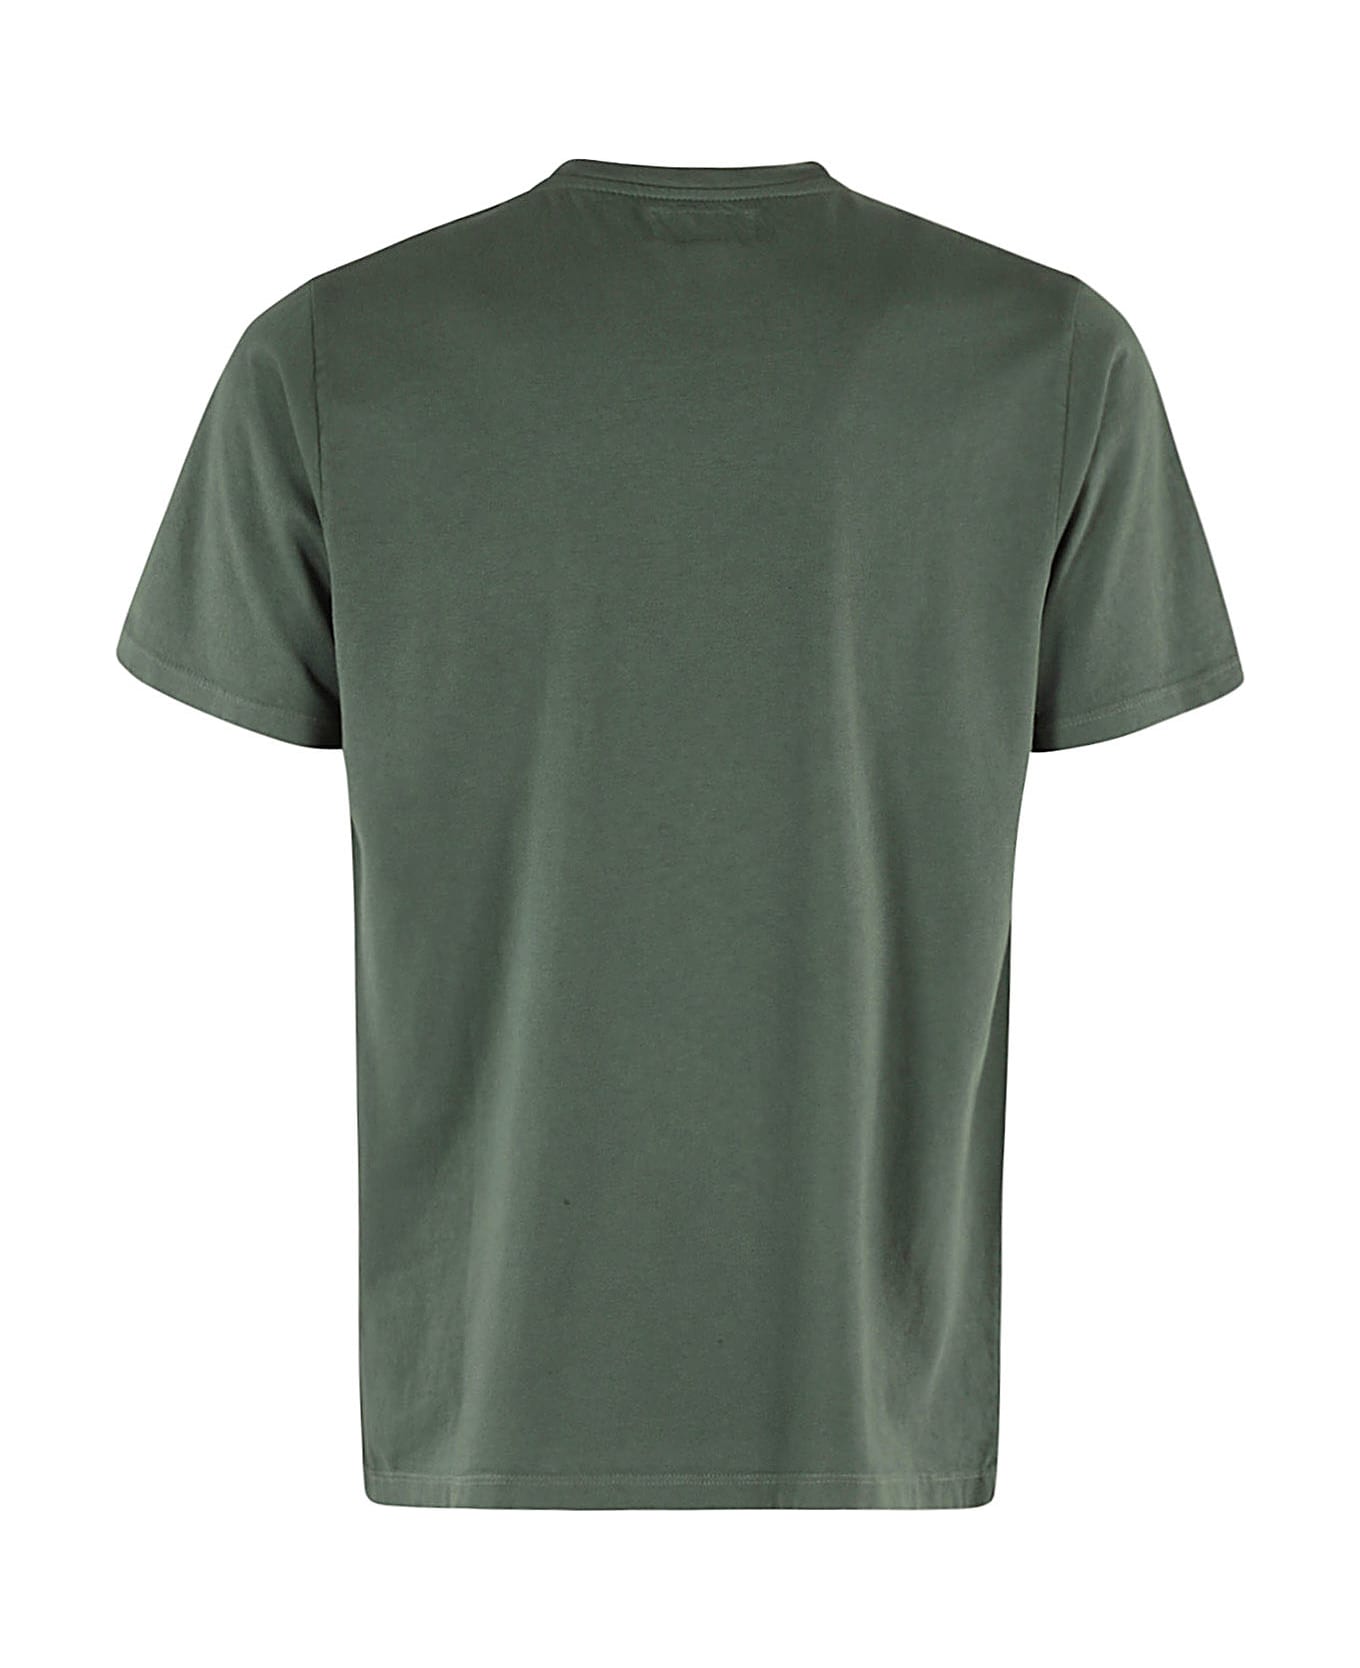 Roy Rogers T Shirt Pocket - University Green